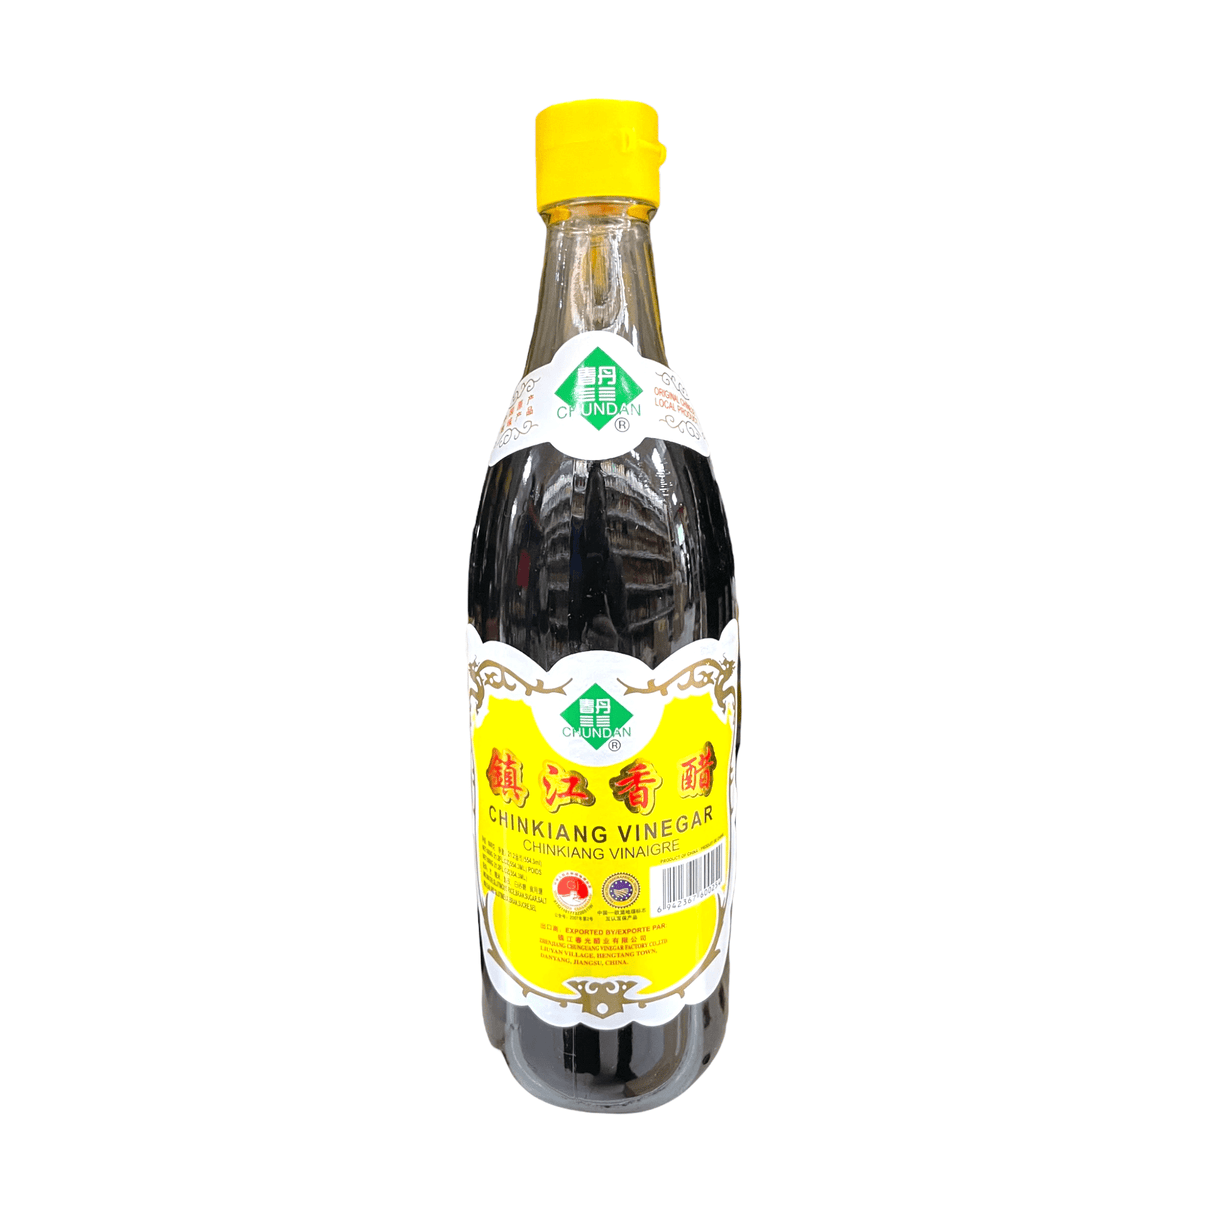 Chundan Chinkiang Vinegar